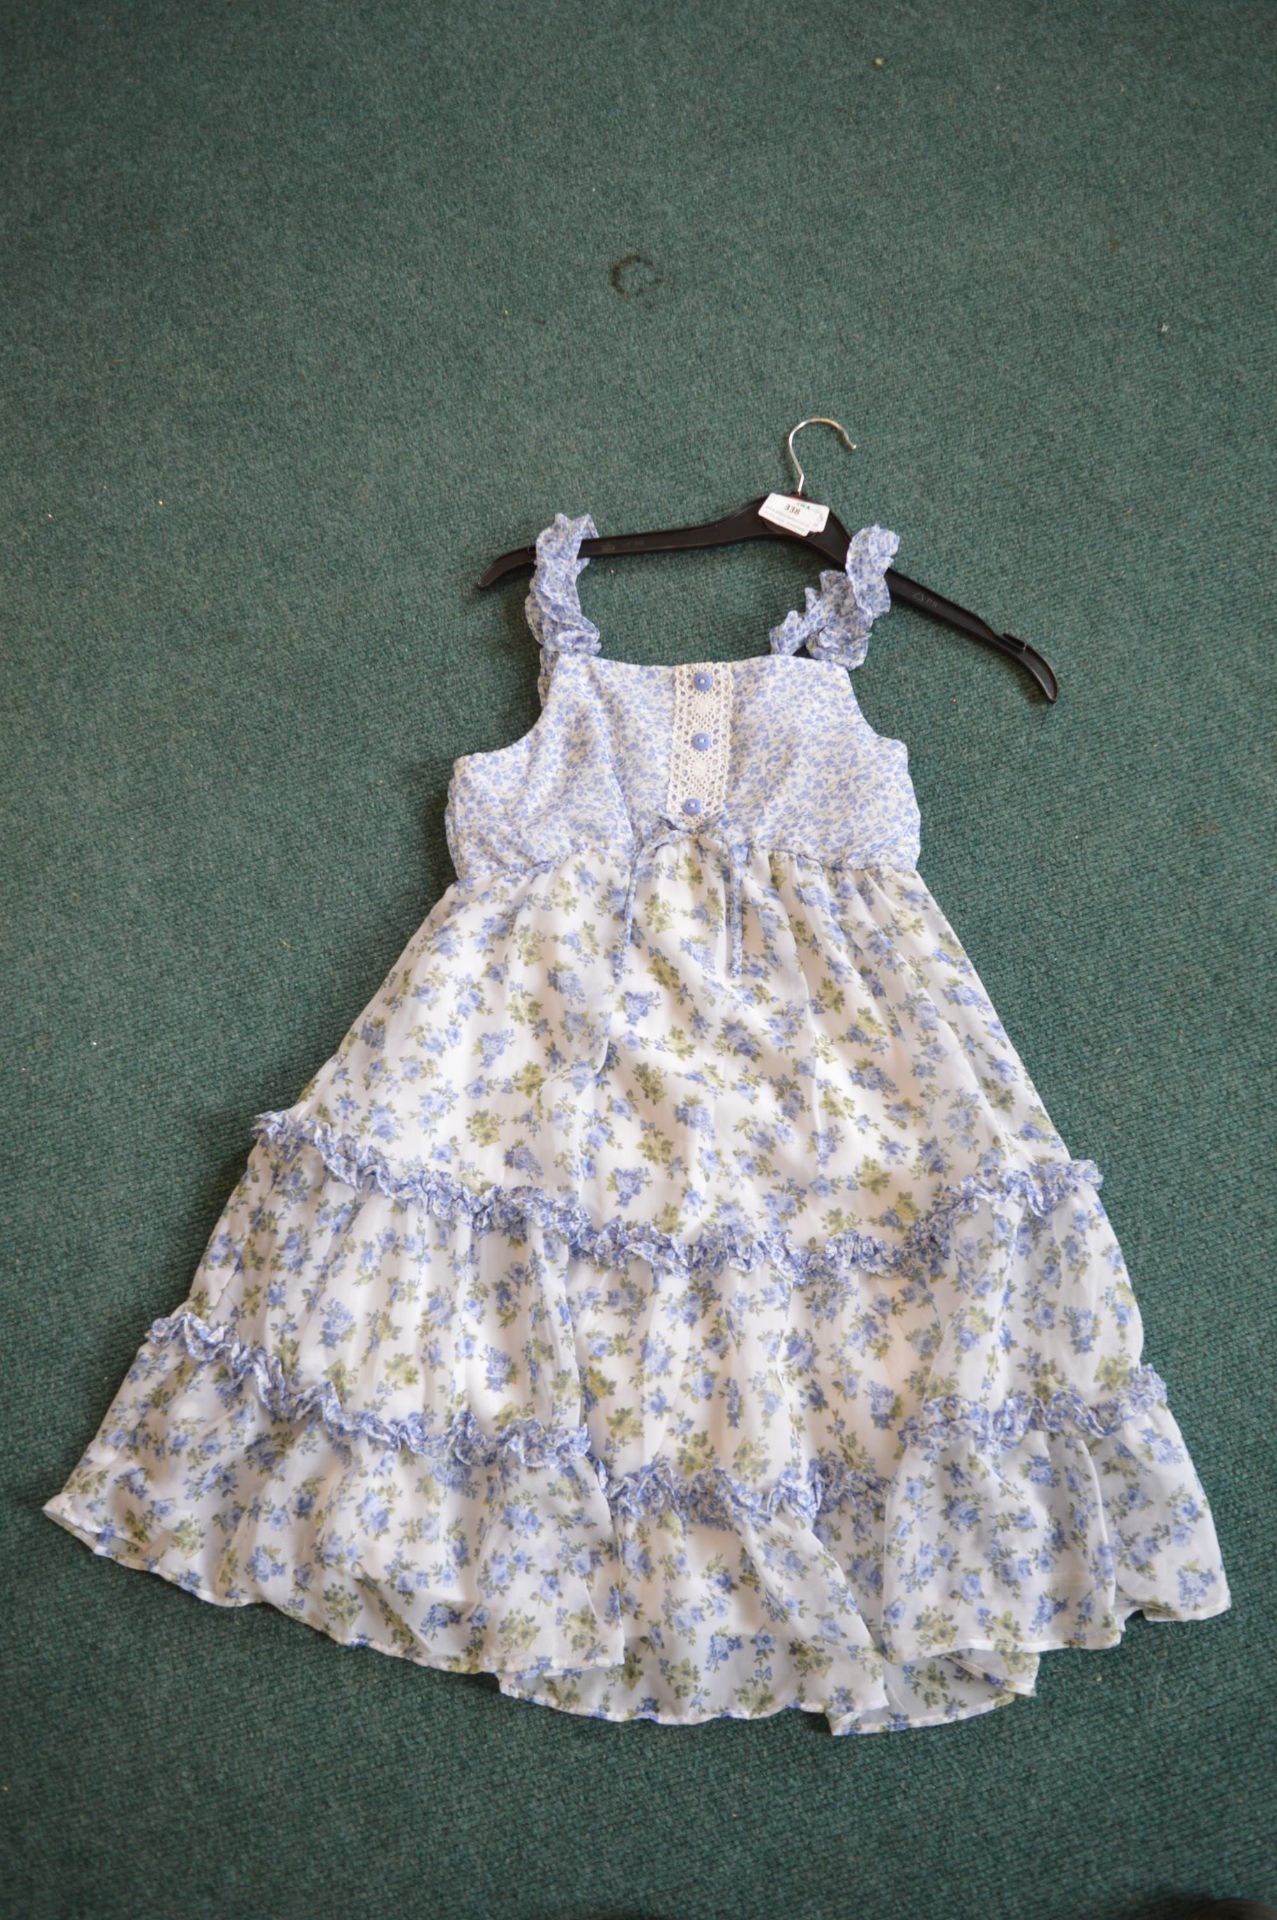 Joanna Michelle Girl's Floral Summer Dress Size: 1